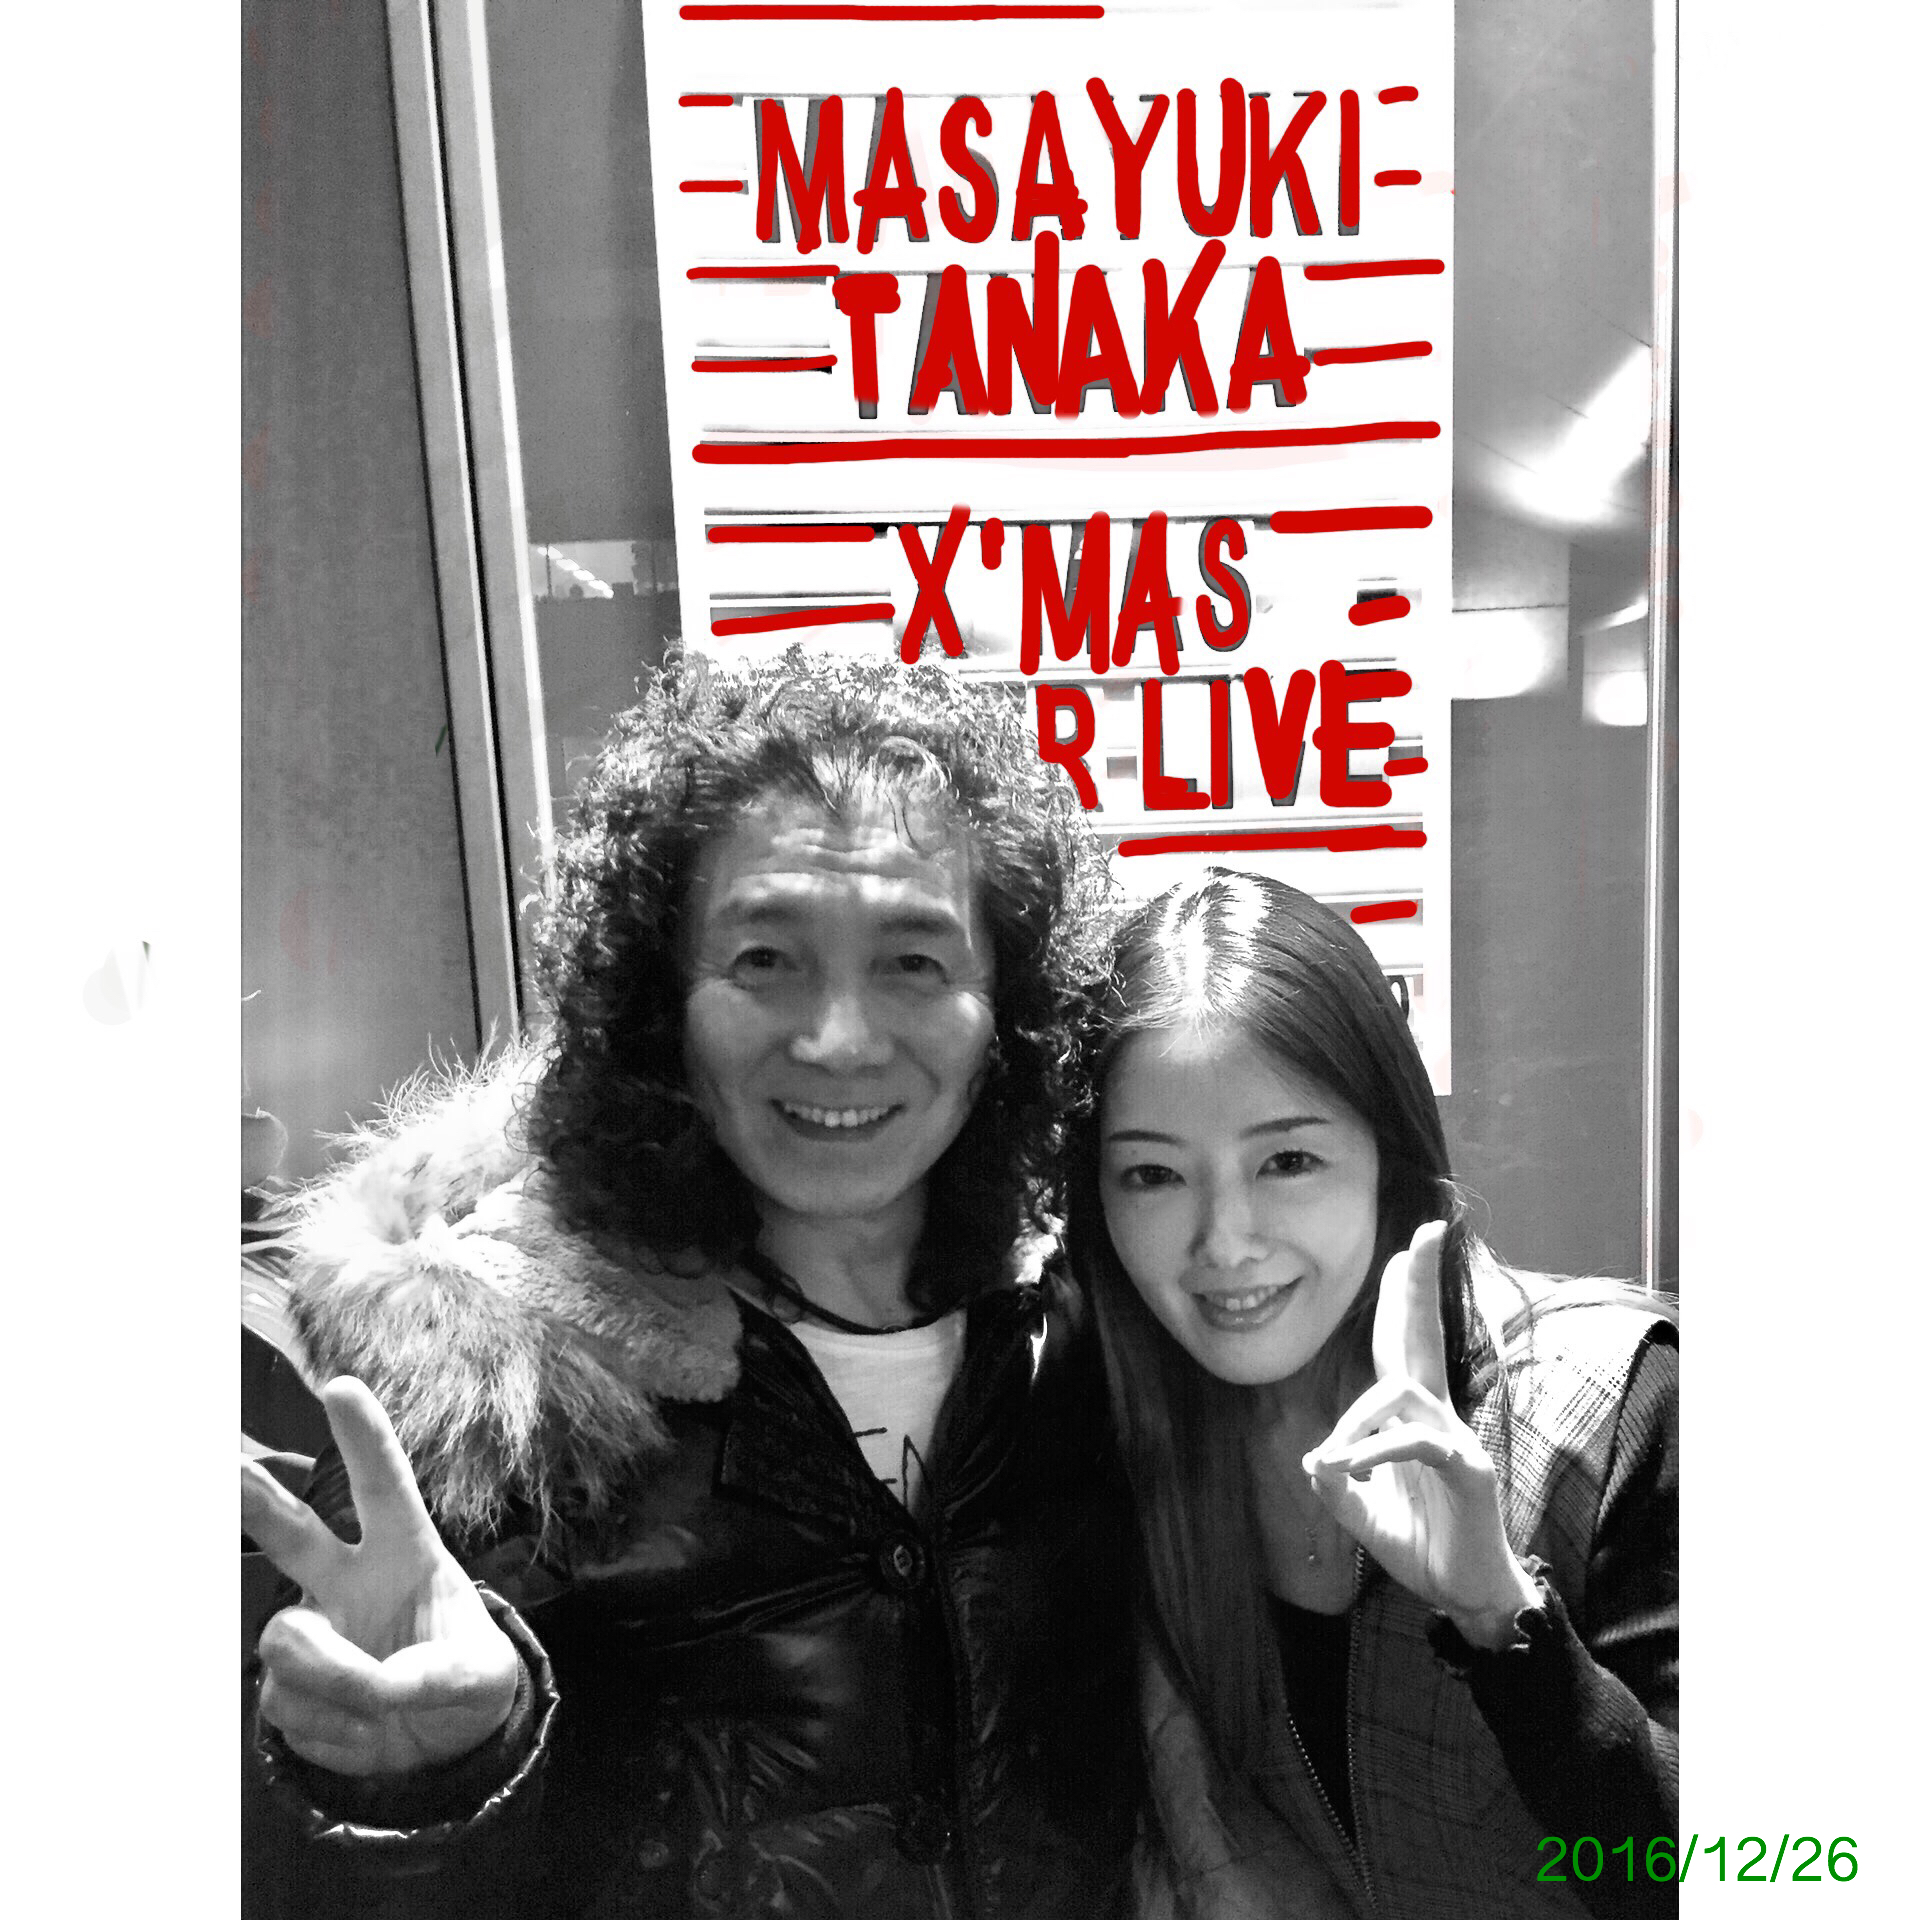 2016年12月26日，田中昌之 Xmas after LIVE